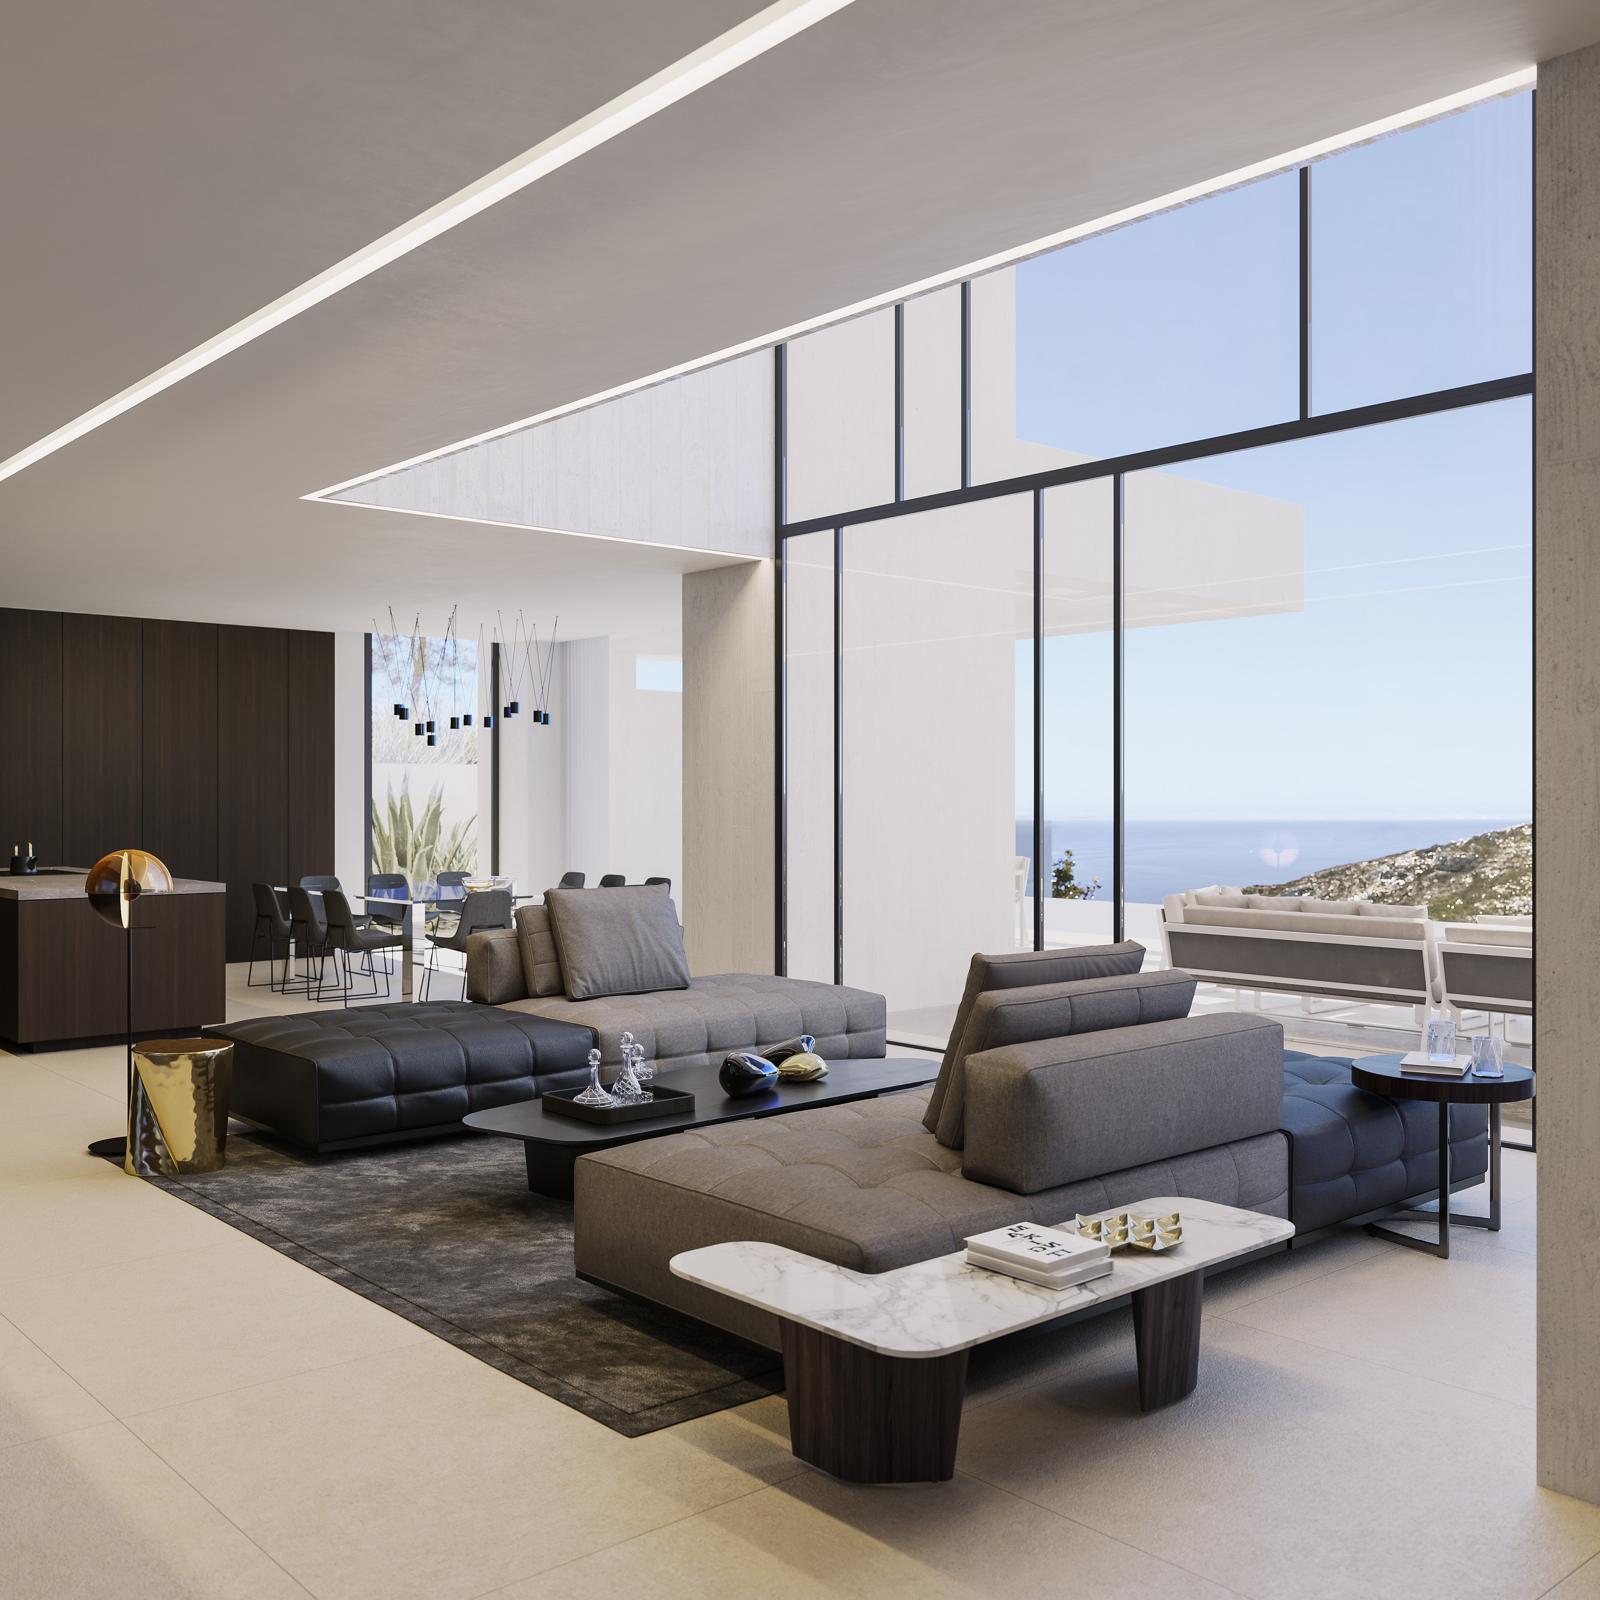 Projet avec licence de villa de luxe moderne à vendre à La Granadella - Javea - Costa Blanca